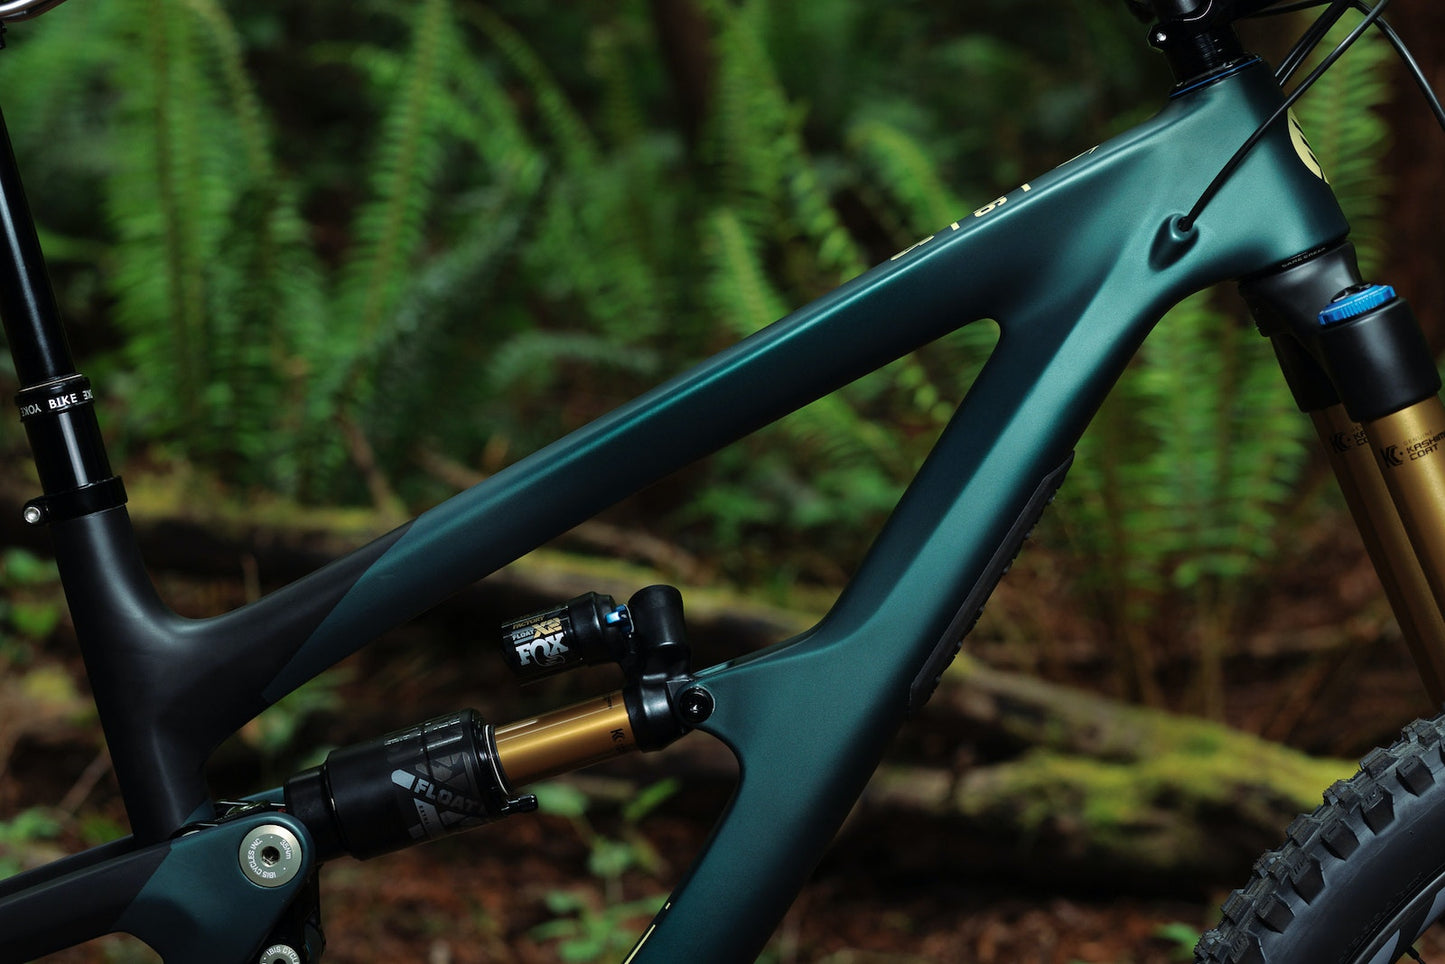 Ibis HD6 MX - XT/AL Wheels - Enchanted Forest Green